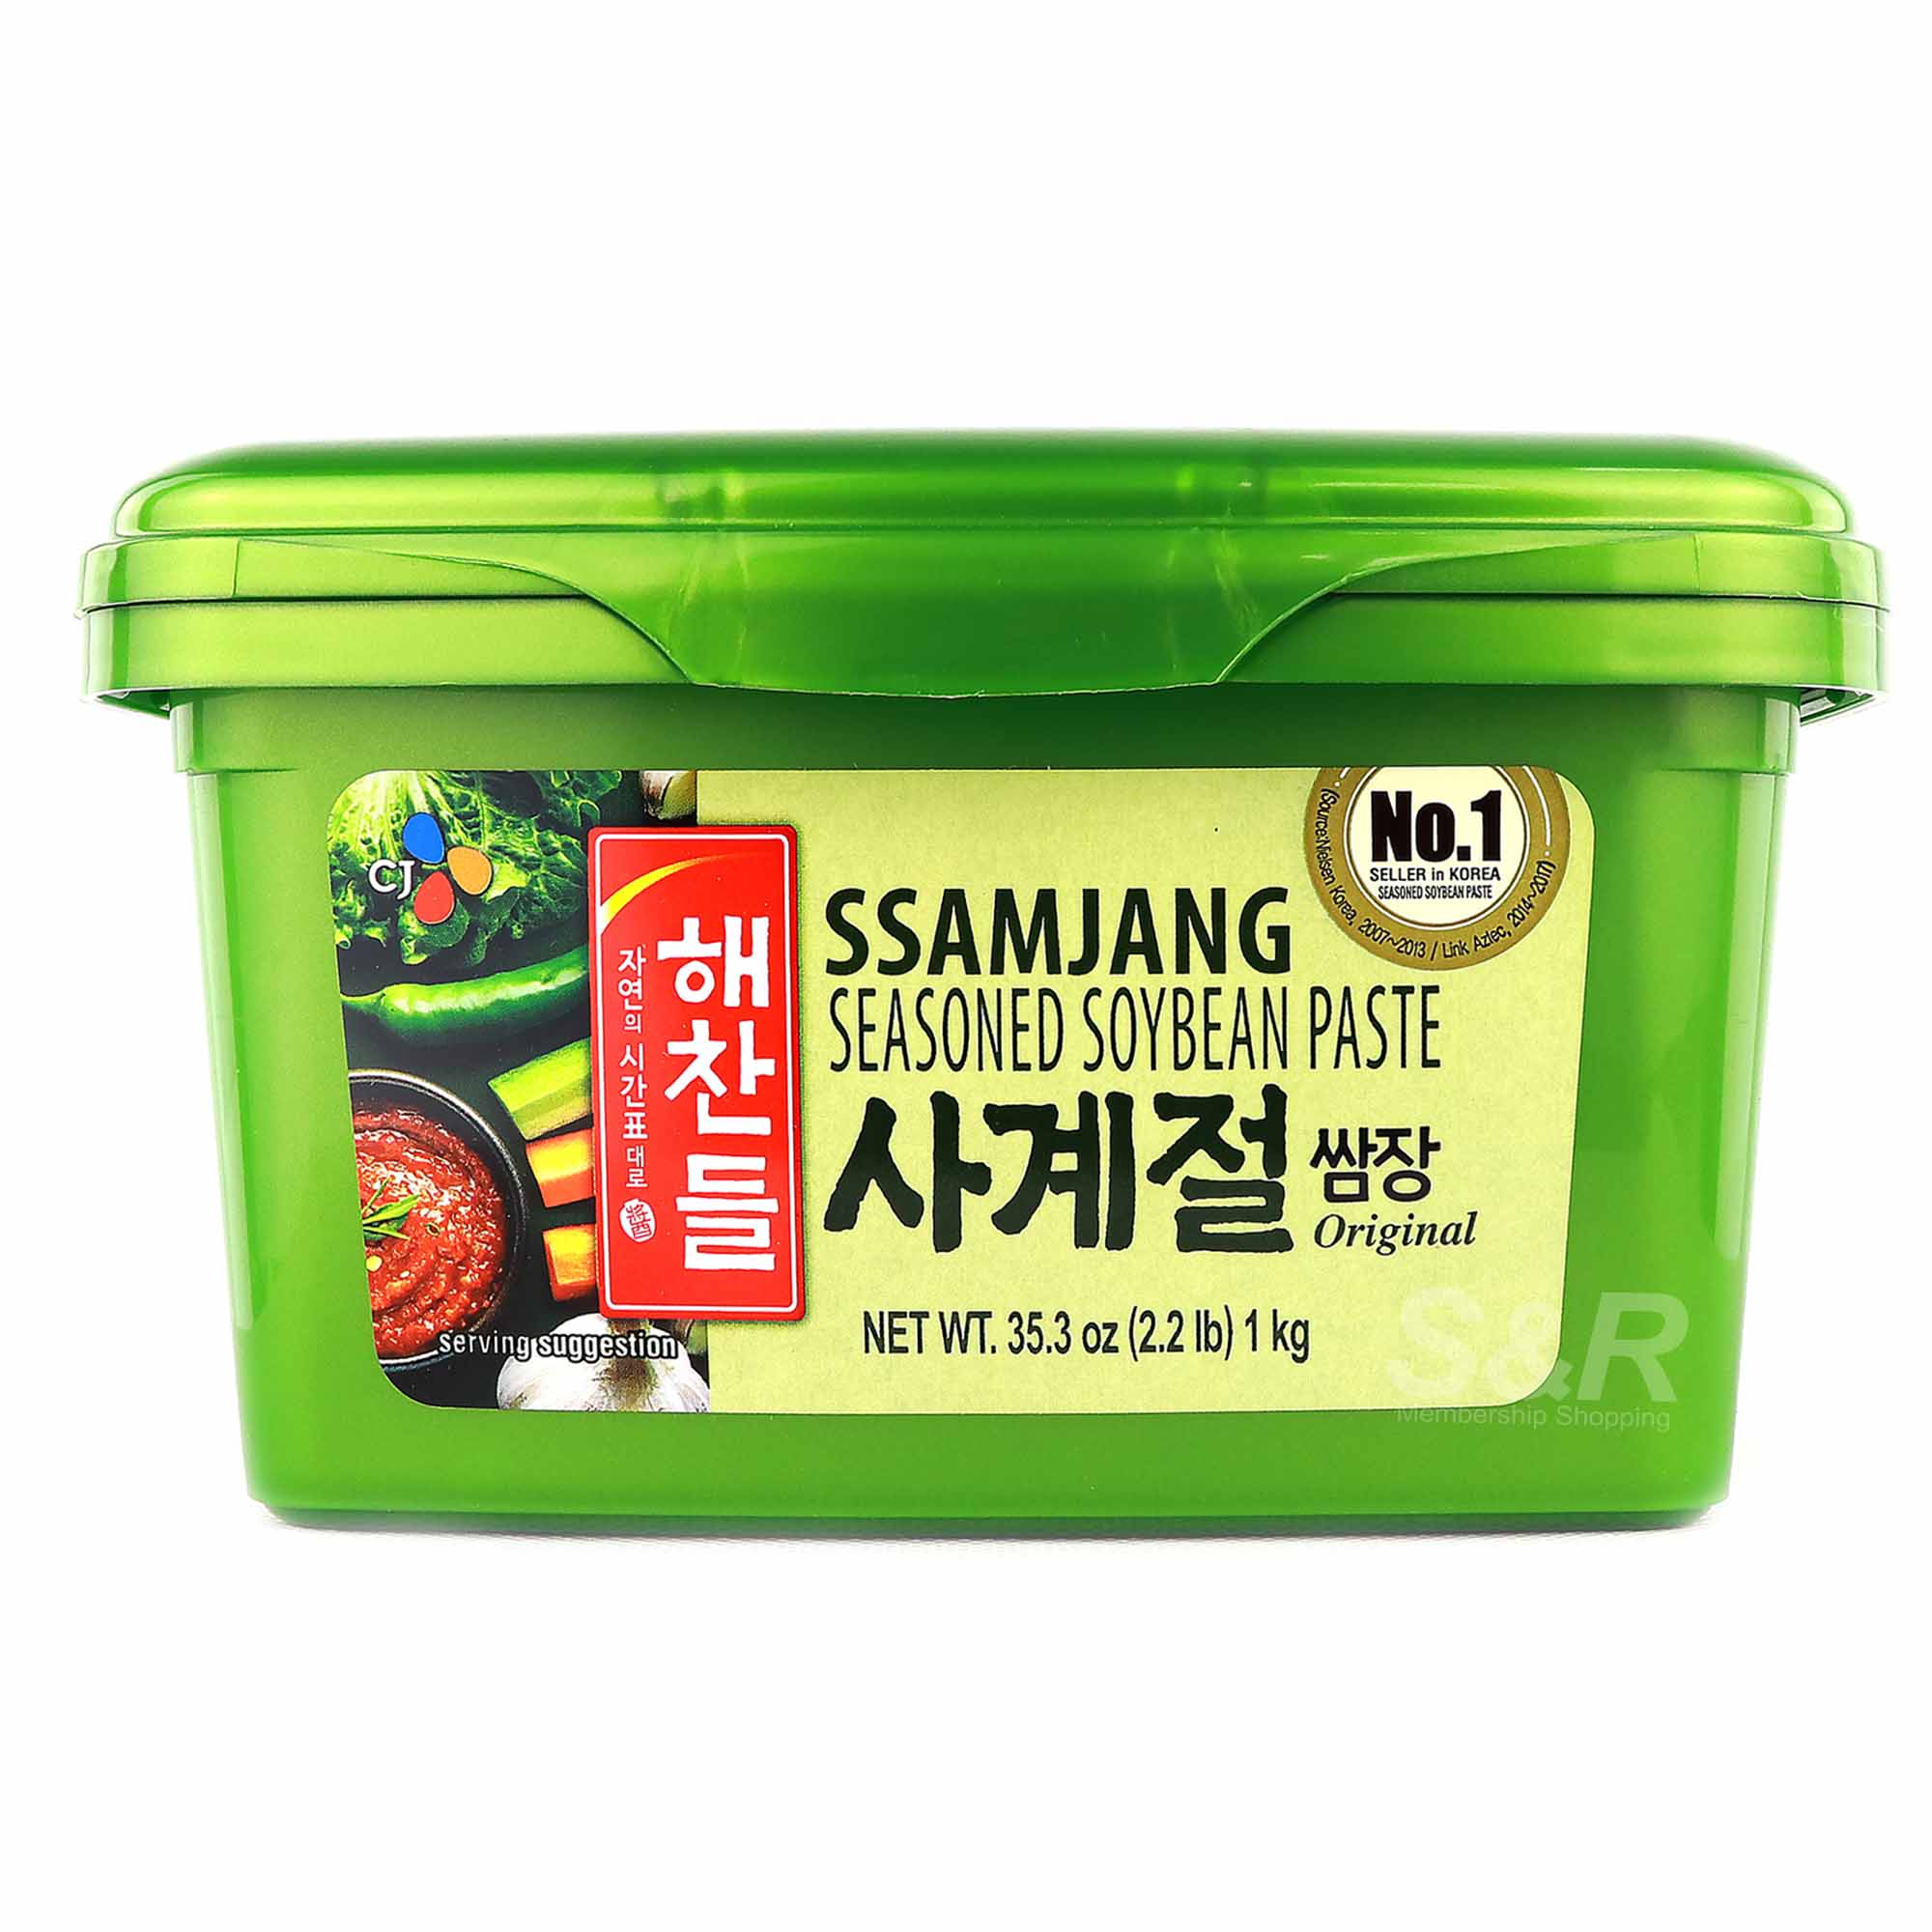 Ssamjang Seasoned Soybean Paste Original Flavor 1kg